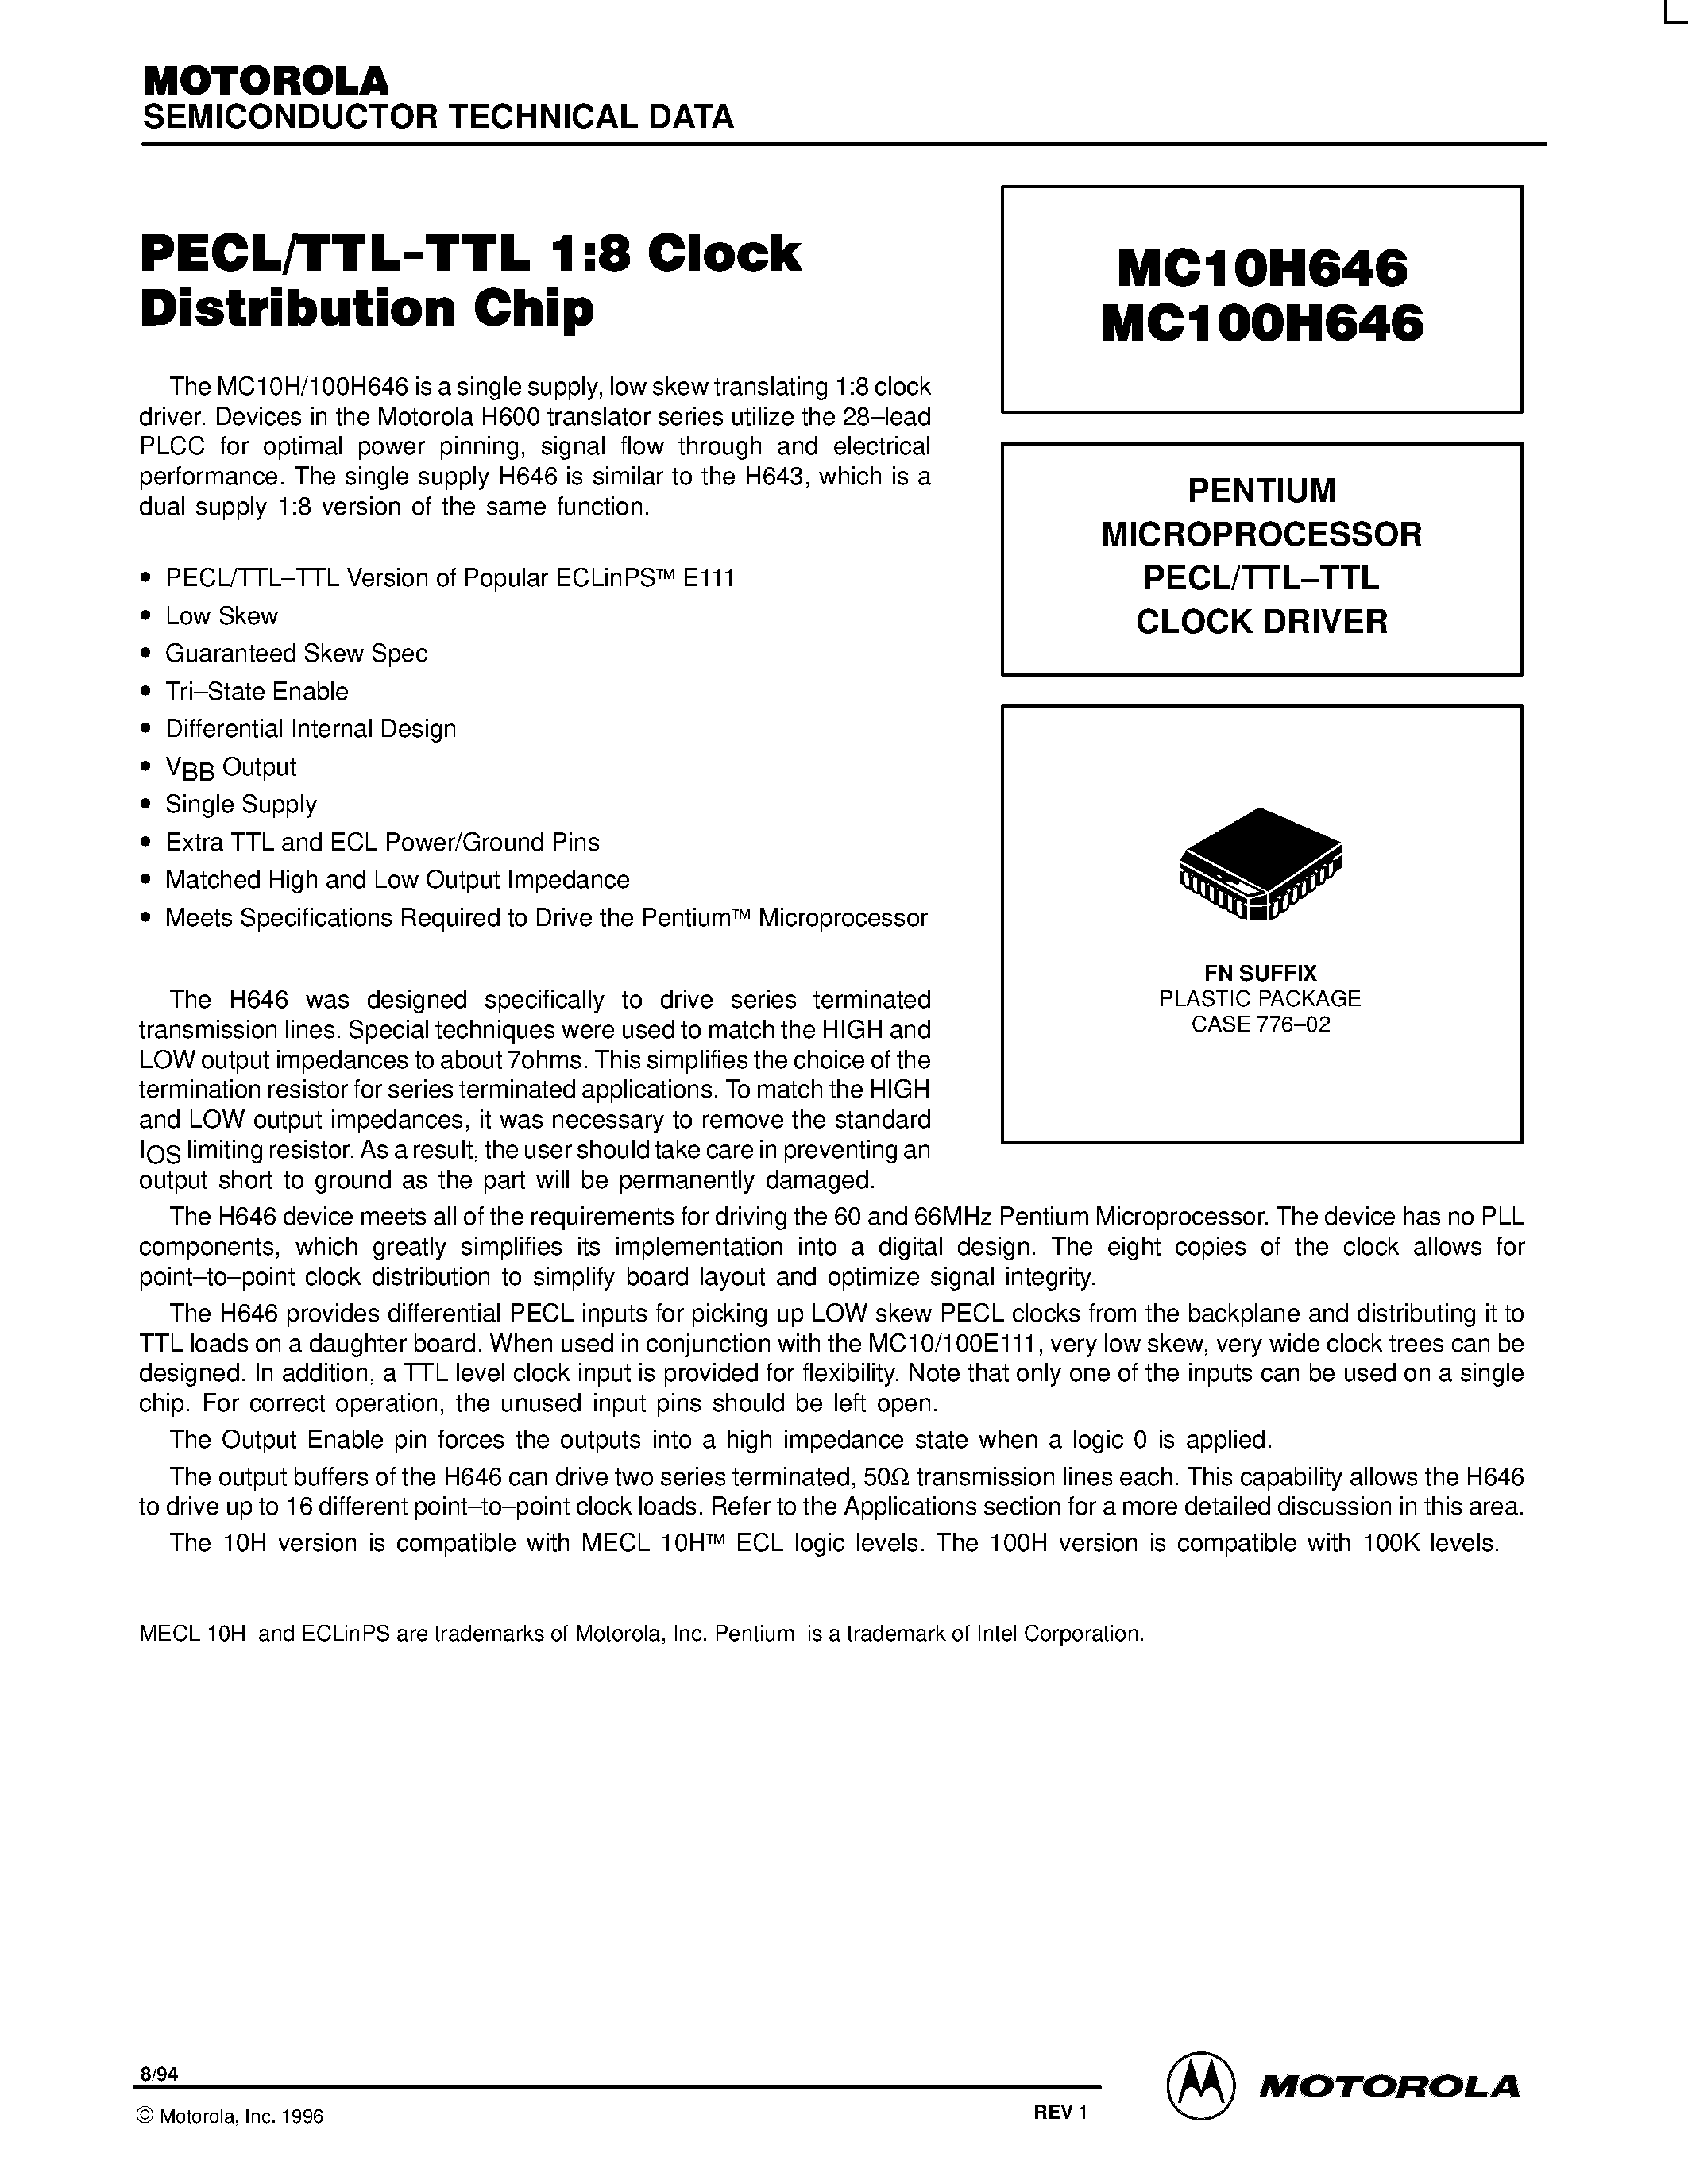 Даташит MC10H646FN - PENTIUM MICROPROCESSOR PECL/TTL-TTL CLOCK DRIVER страница 1